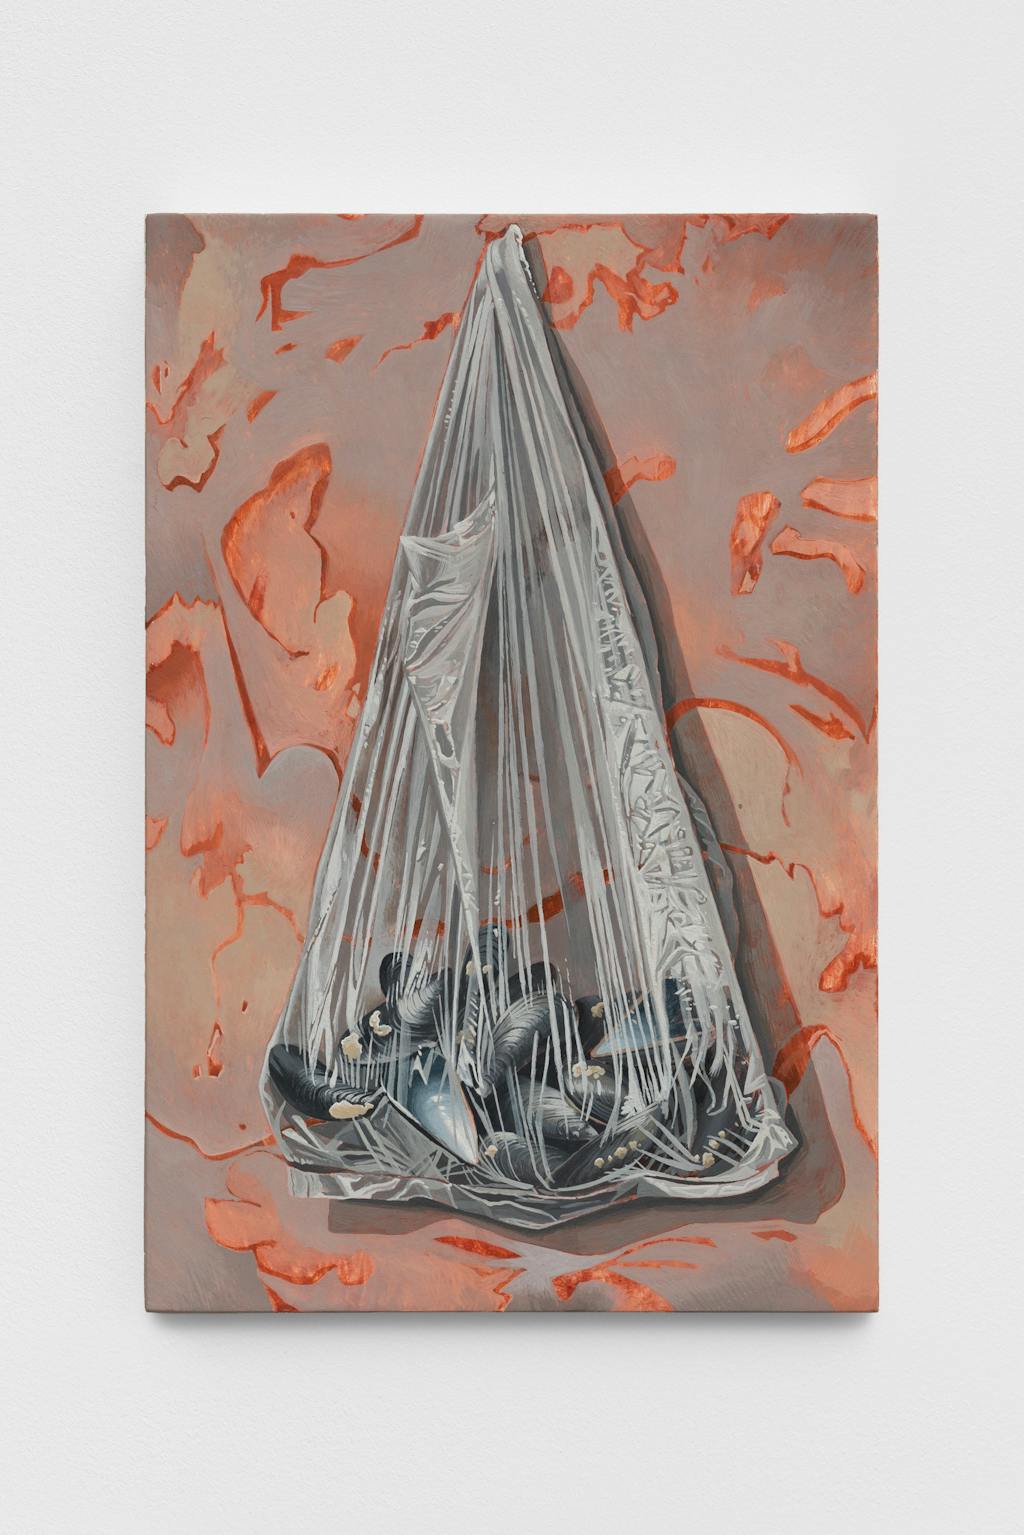 Jannis Marwitz
Untitled, 2022
Tempera on wood
30 x 20 cm - © Paris Internationale